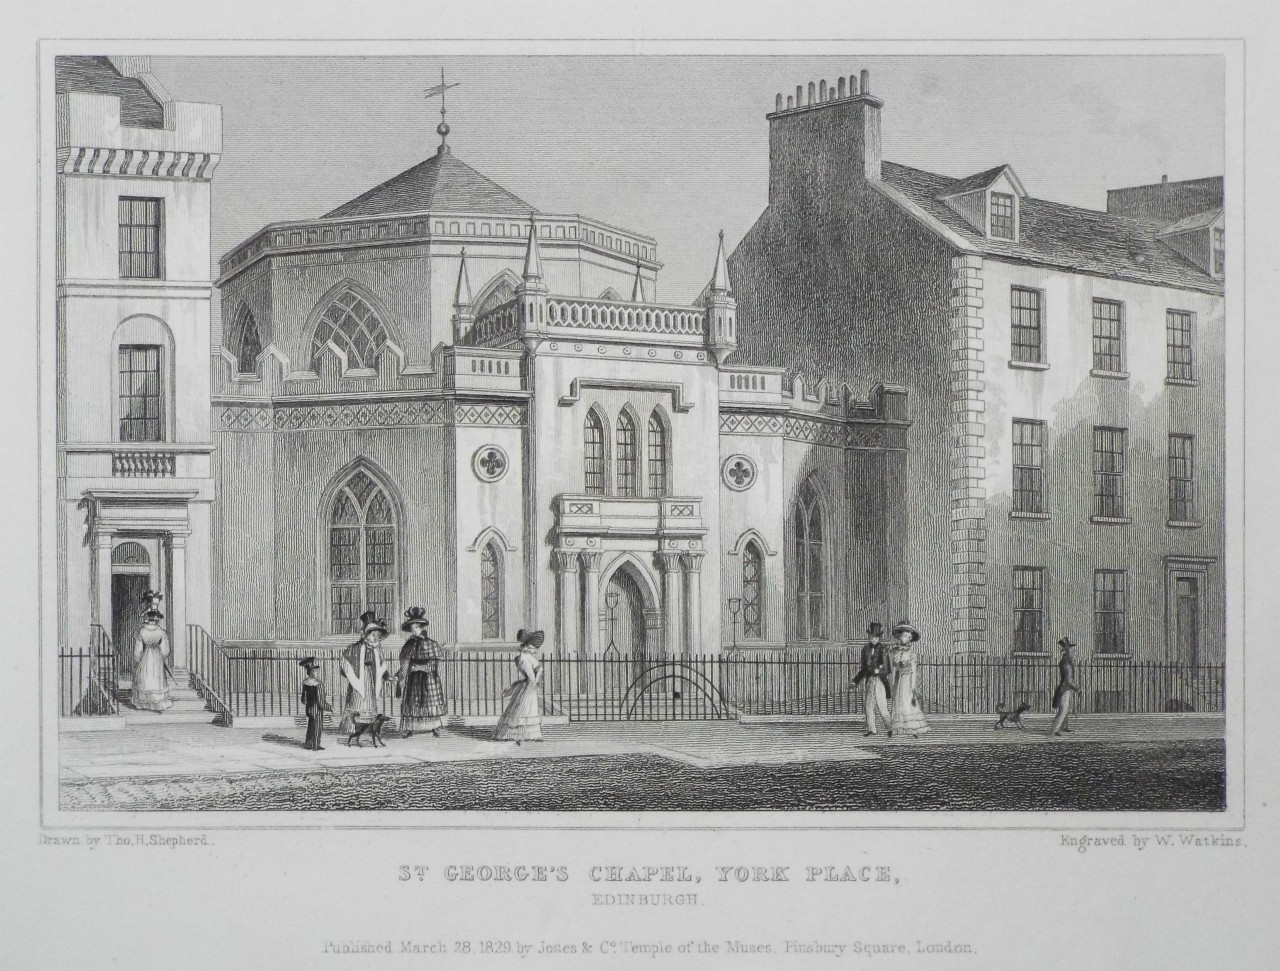 Print - St. George's Chapel, York Place, Edinburgh. - Watkins